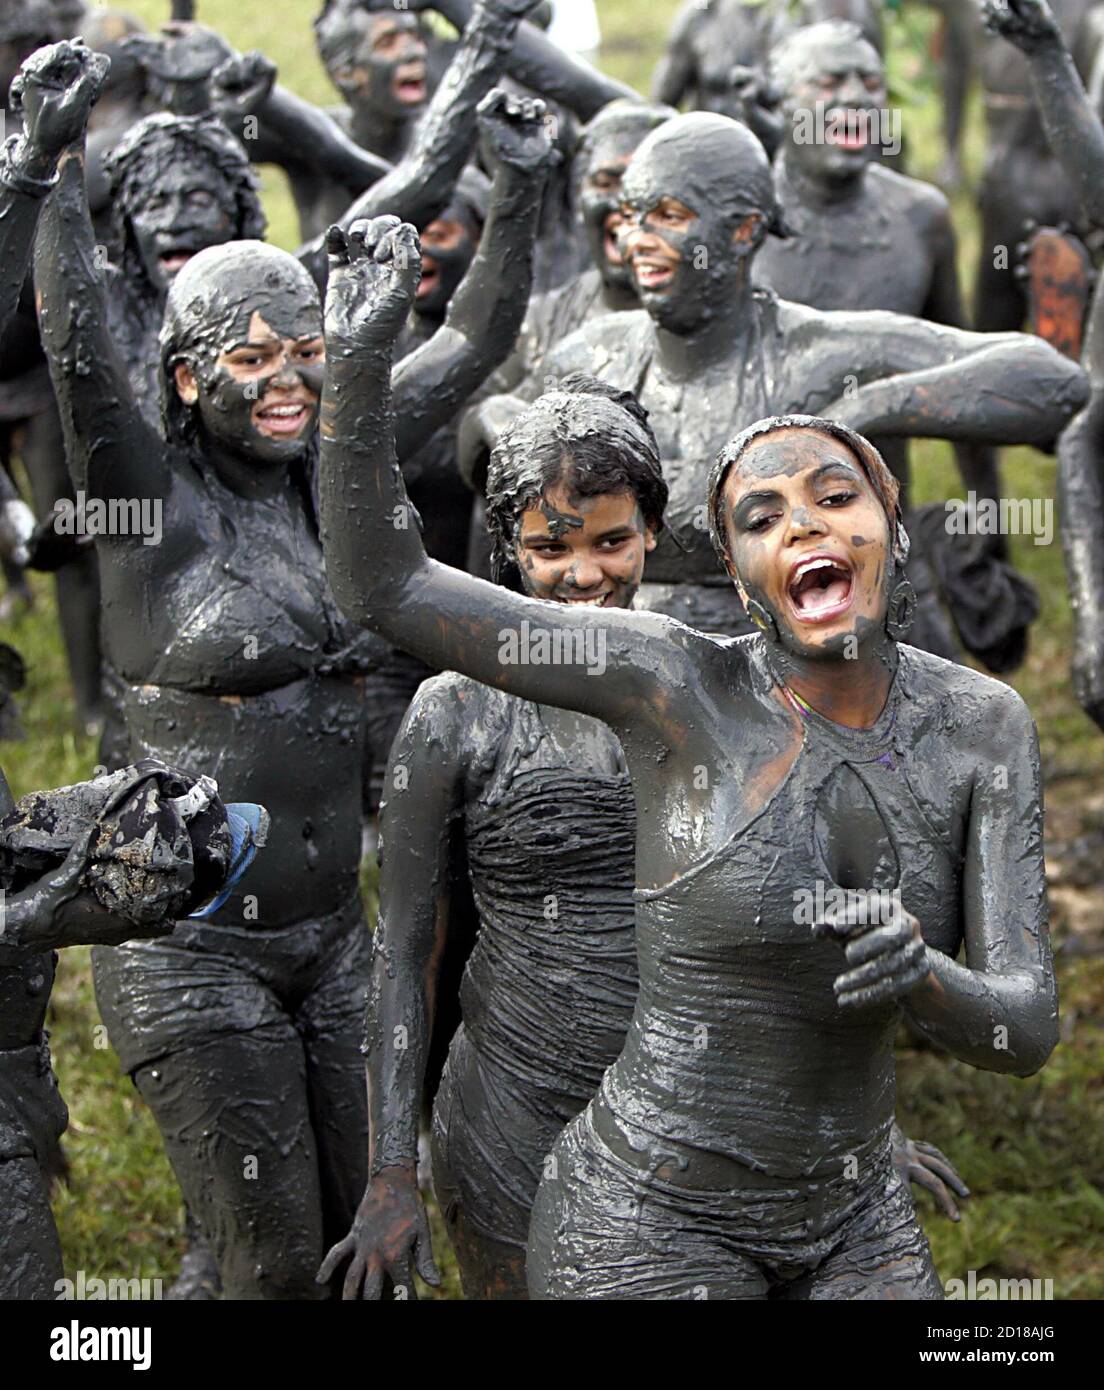 Members of the "Bloco da Lama" (Block of Mud) group perform near Jabaquara  beach in the city of Paraty, 263 km (163 miles) from [Rio de Janeiro]  February 25, 2006. During Carnival,